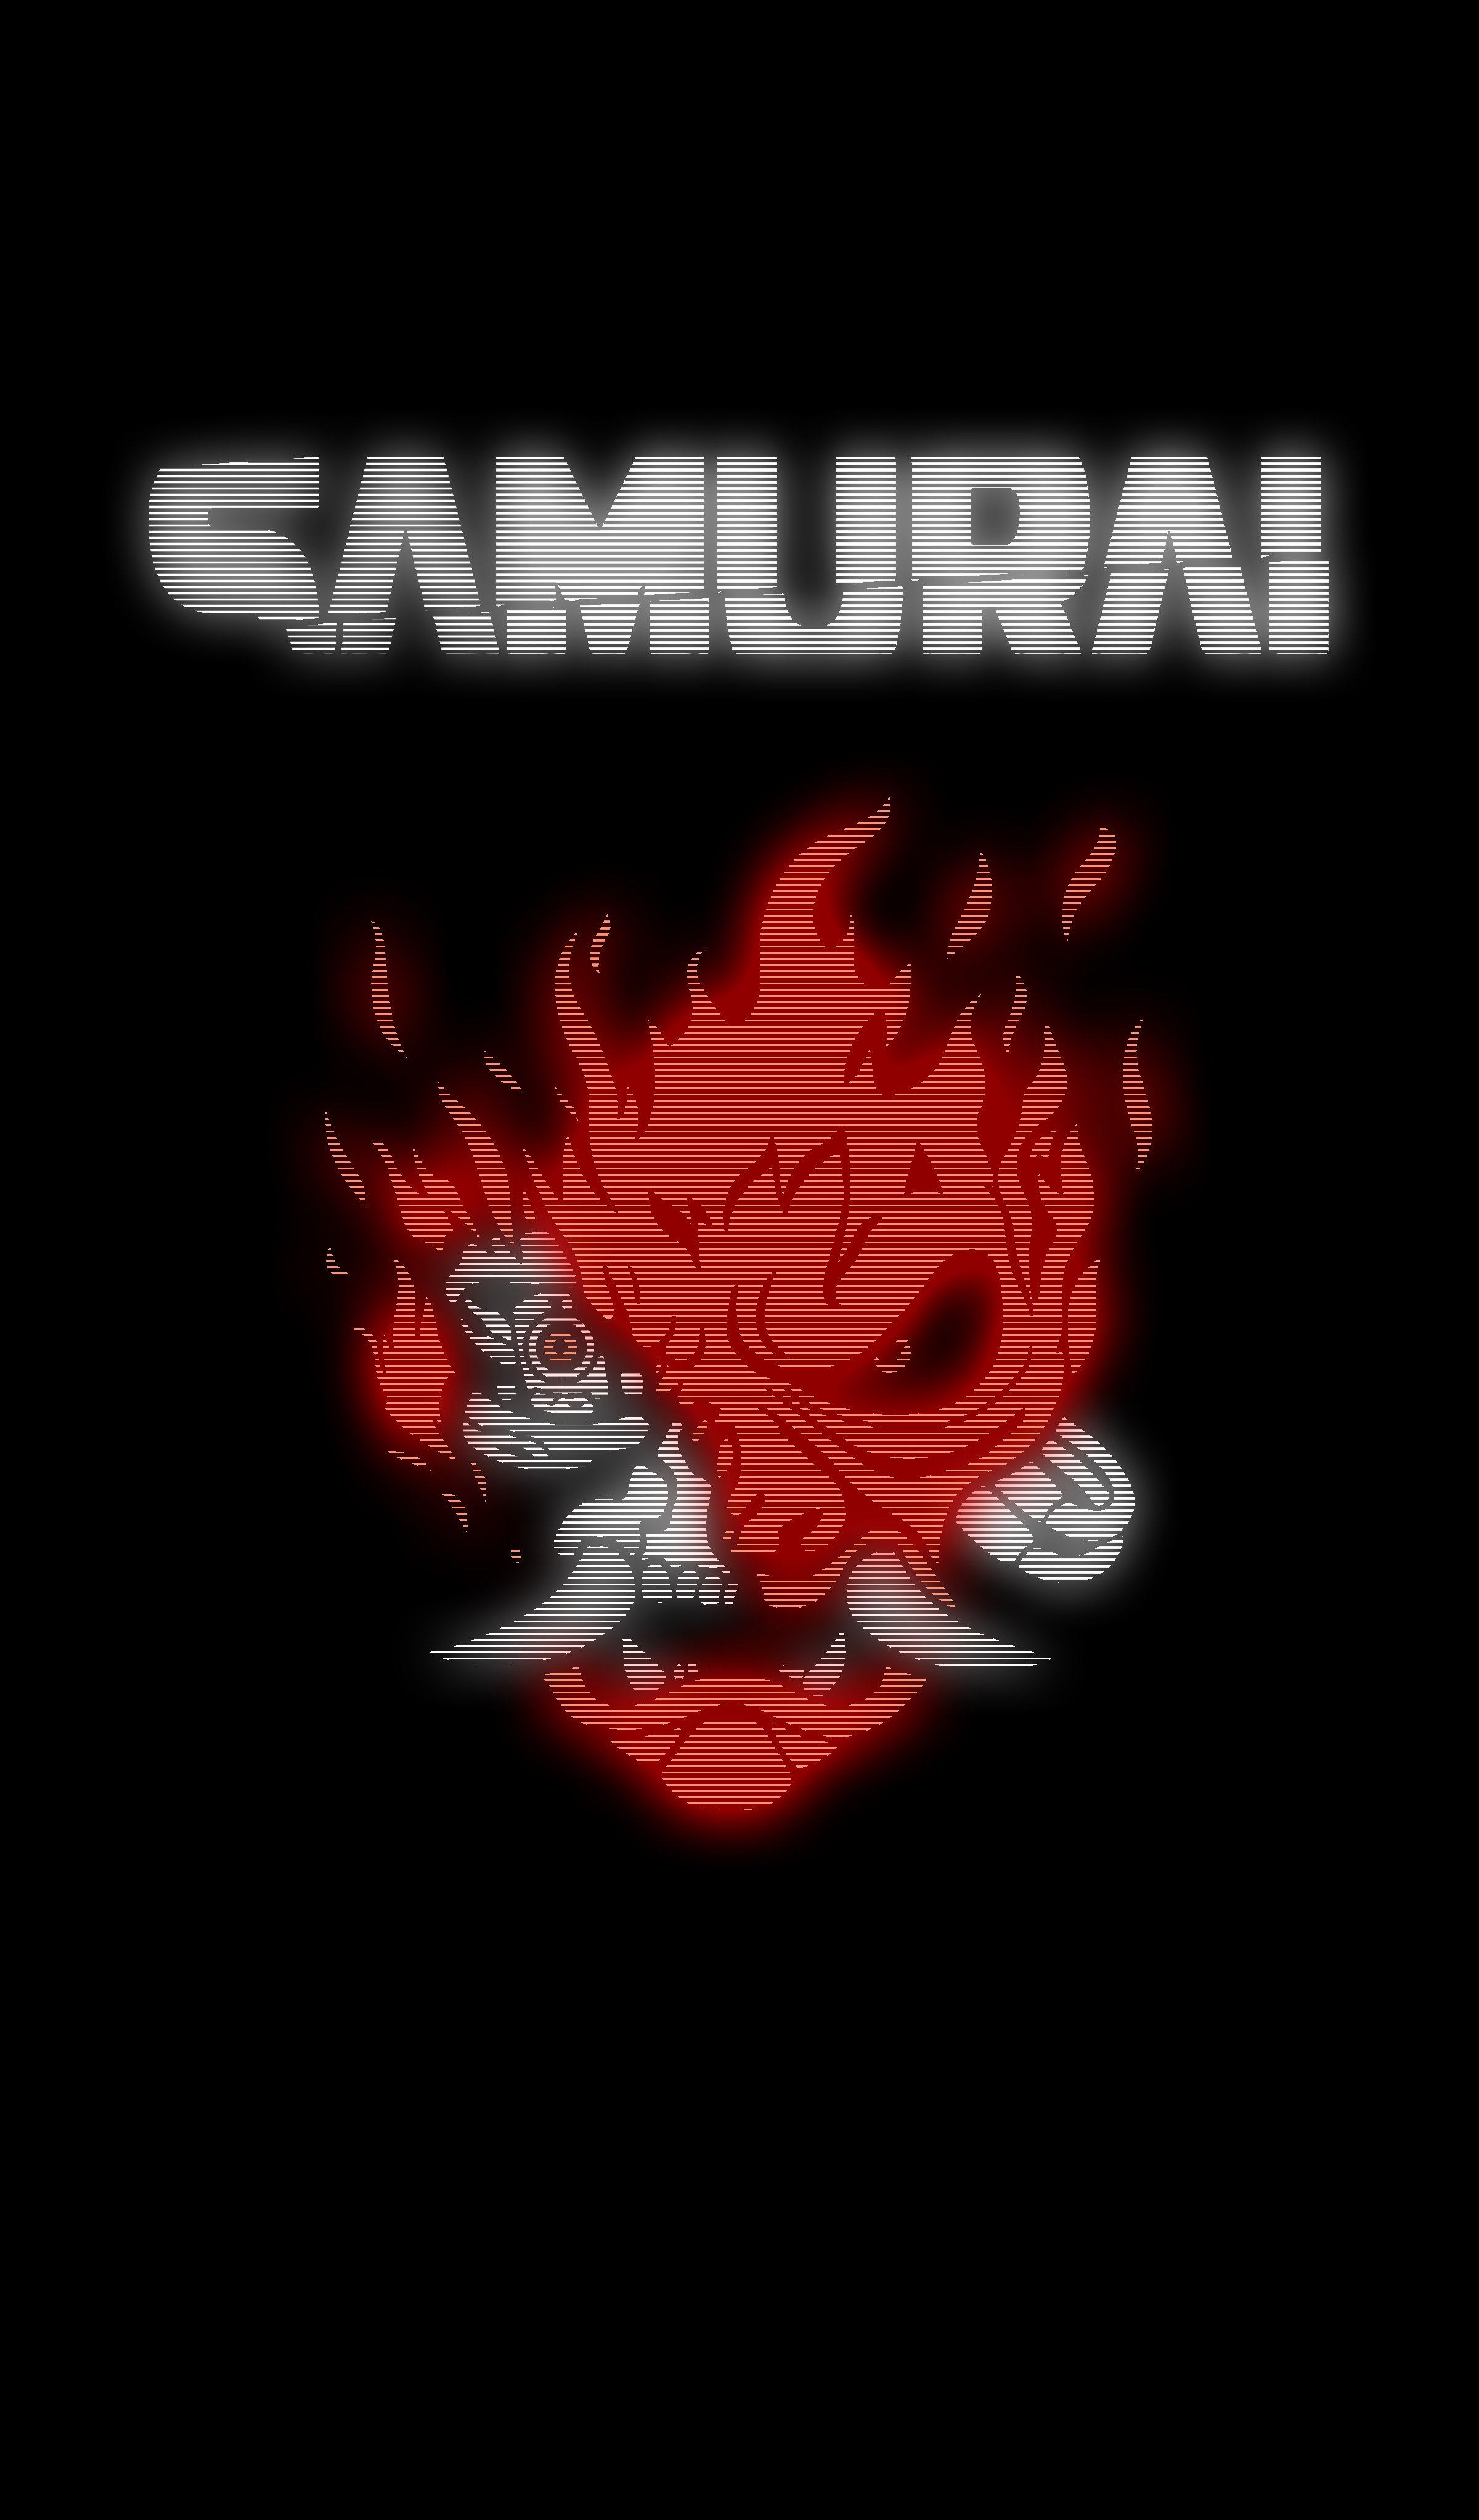 Download Cyberpunk samurai wallpaper by 6toxic6 - 0b - Free on